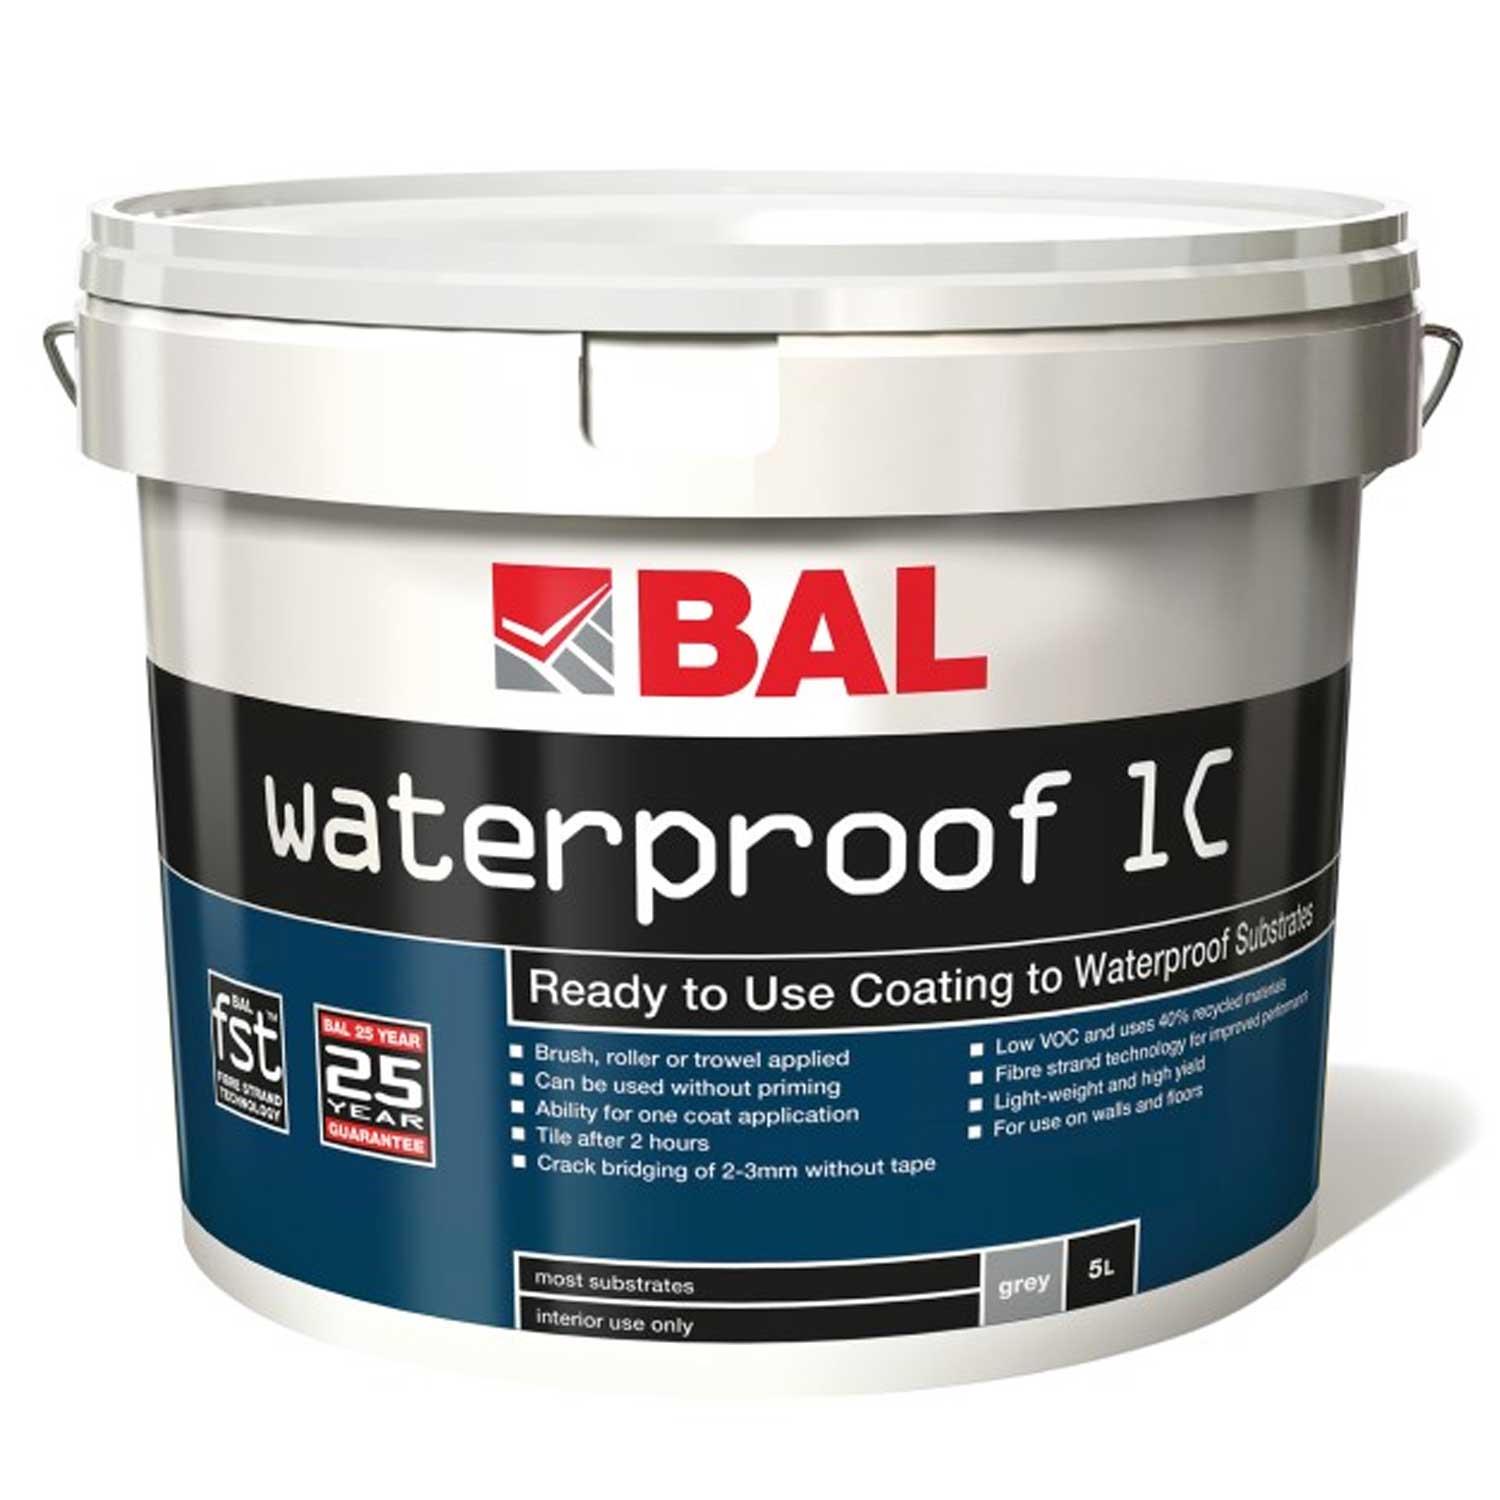 BAL Waterproof 1C Coating 5L Ready to Uee